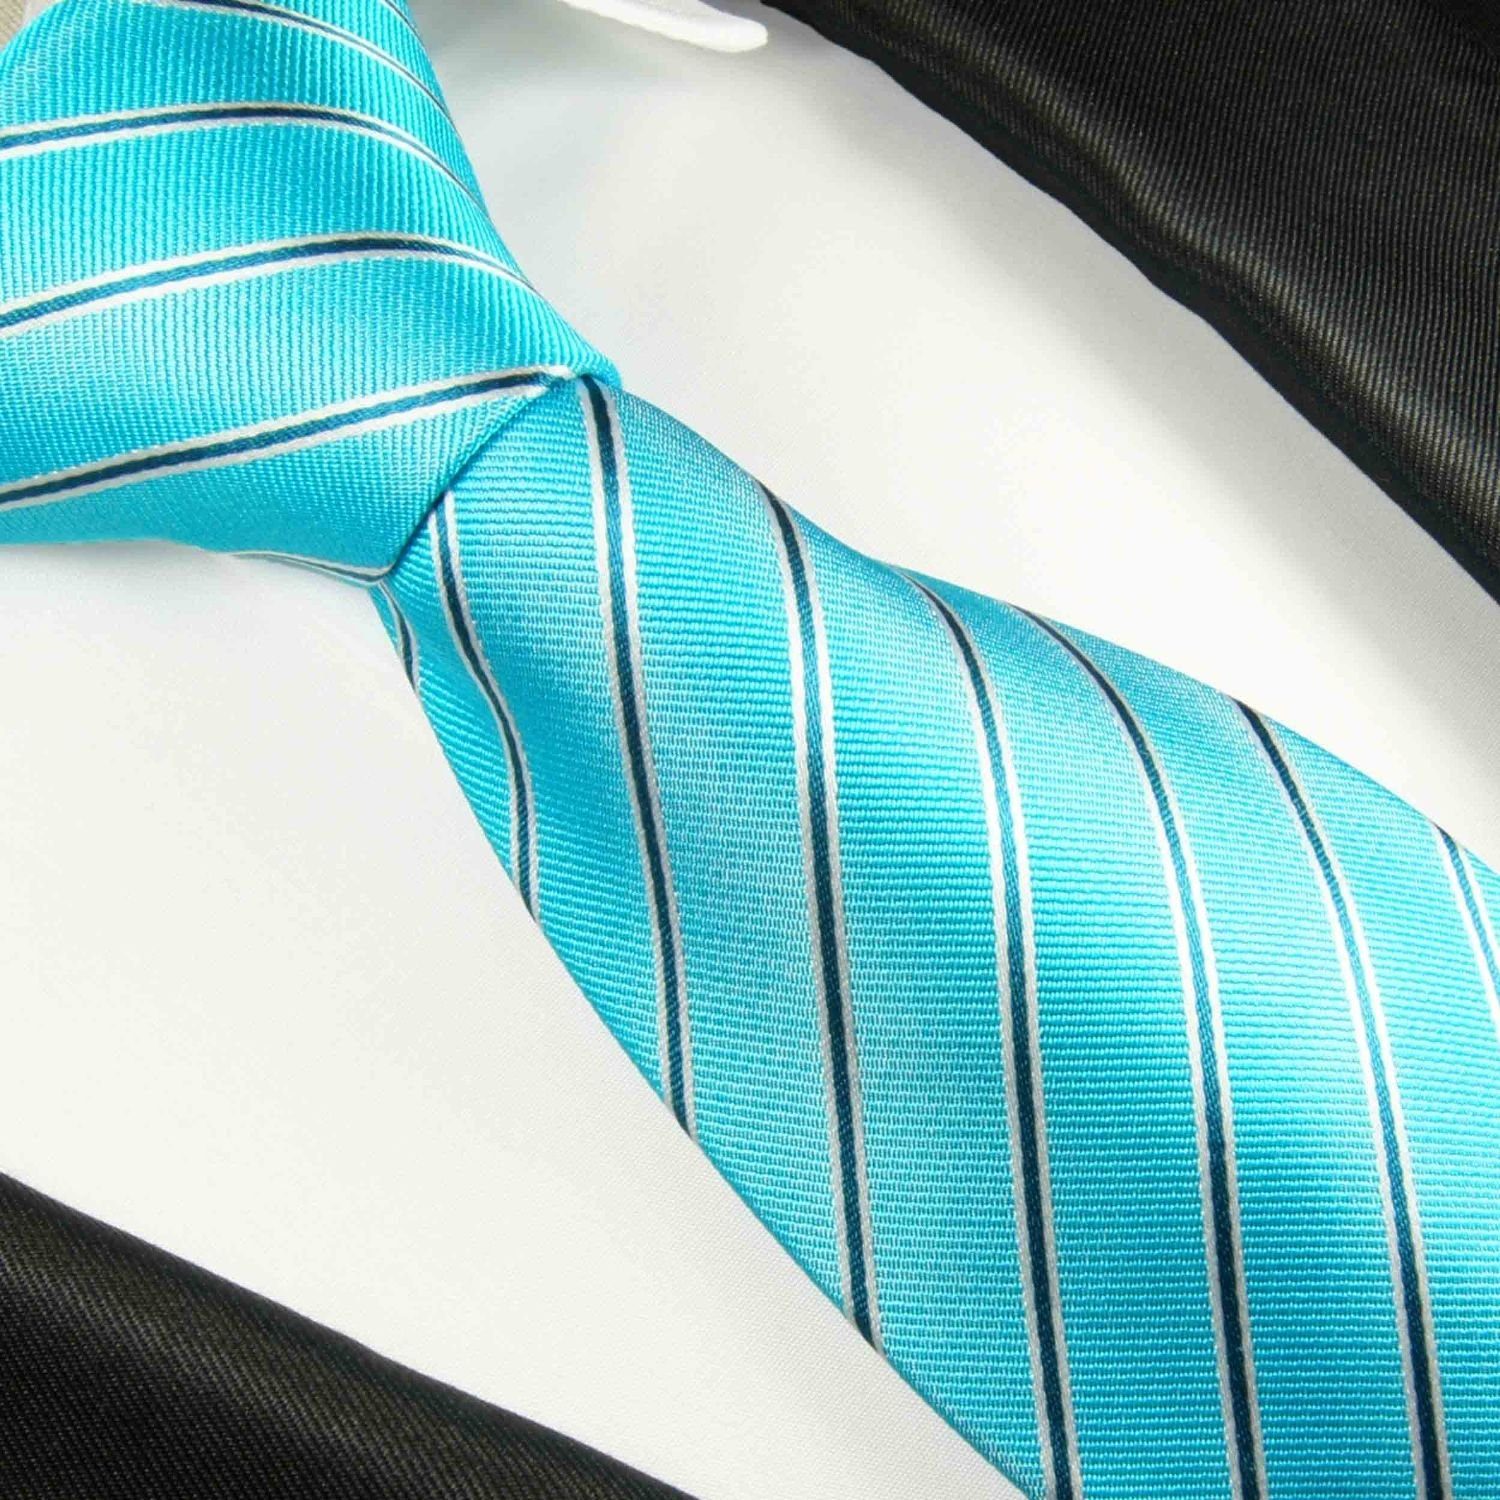 Paul Malone Krawatte Designer Seidenkrawatte Seide Schmal (6cm), modern gestreift 2099 Herren Schlips 100% türkis